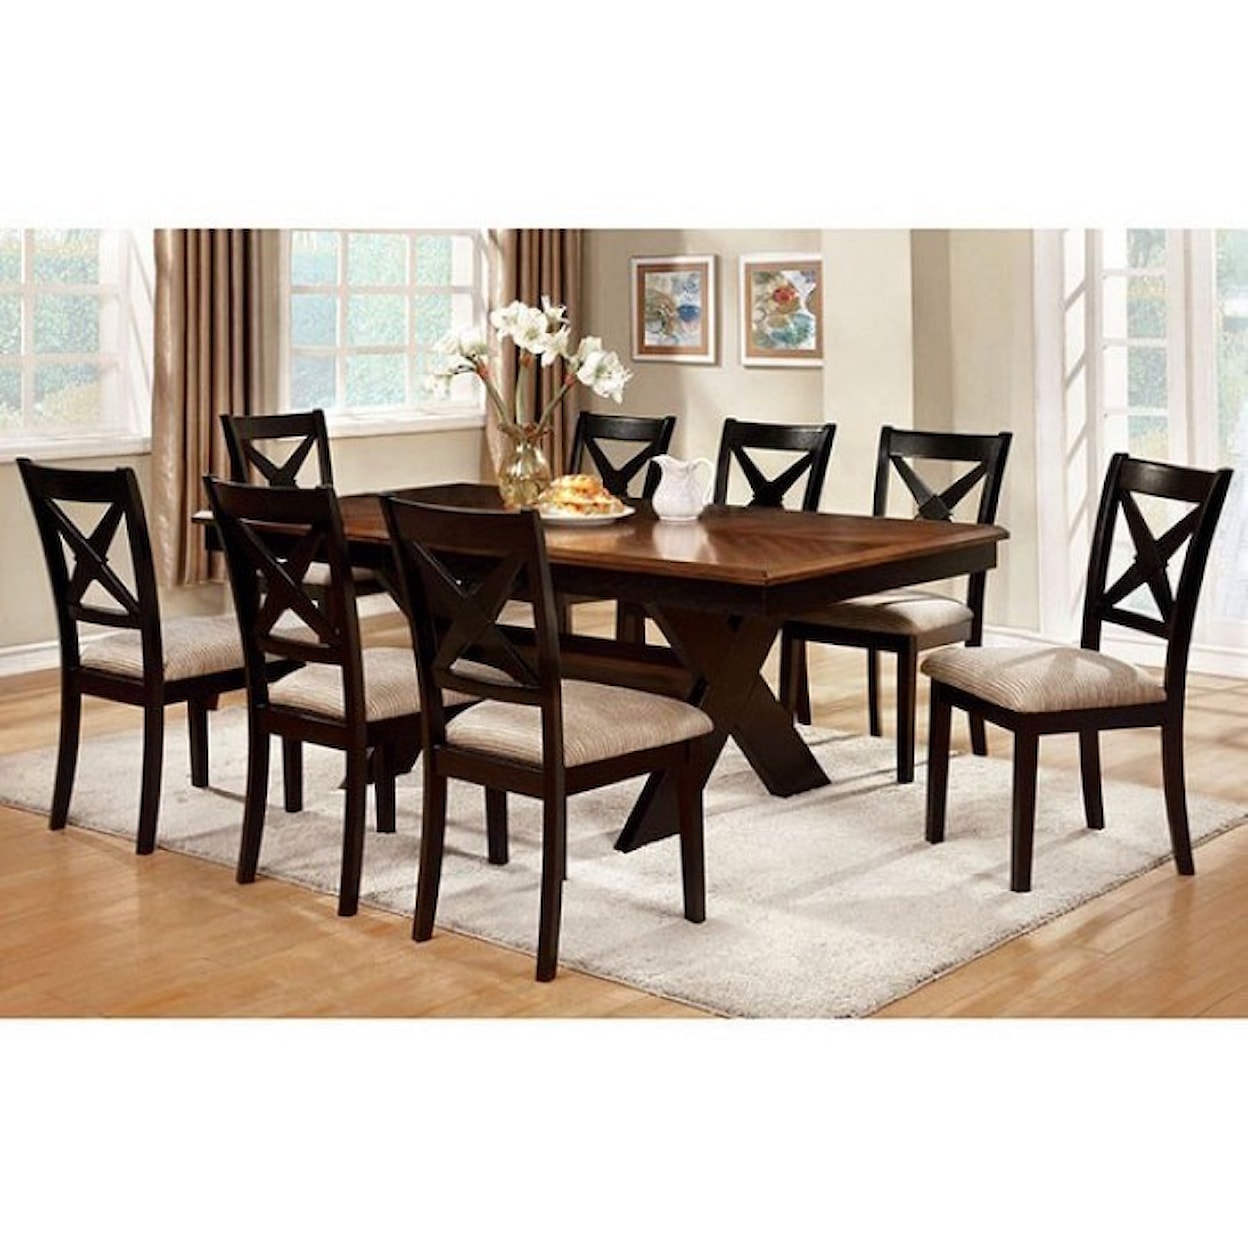 Furniture of America Liberta Dining Table